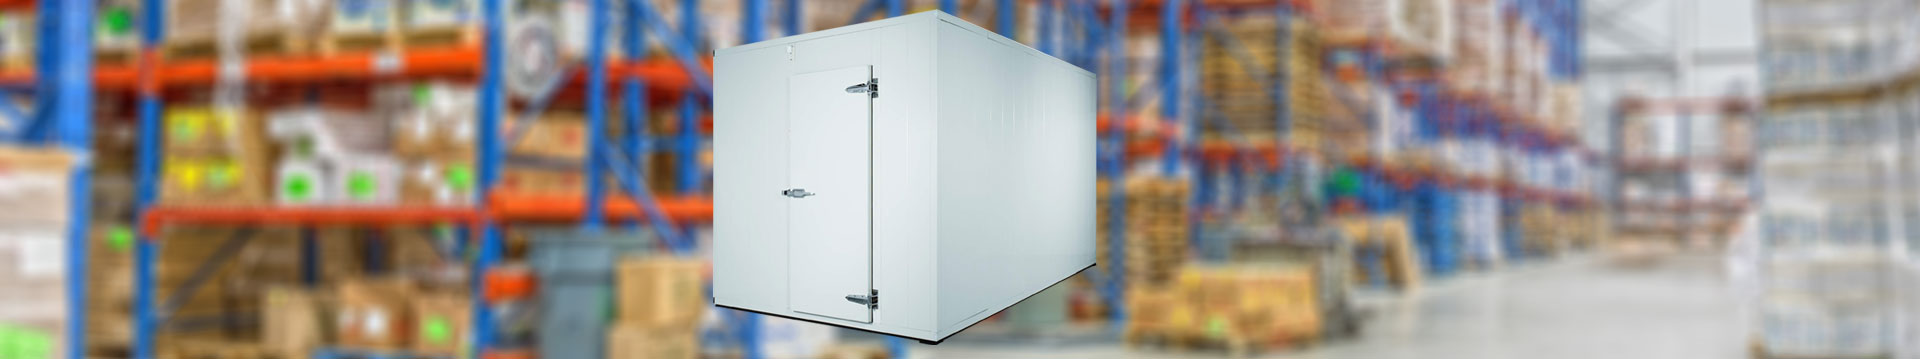 Evaporator/Indoor | Refrigeration Unit For Cold Room